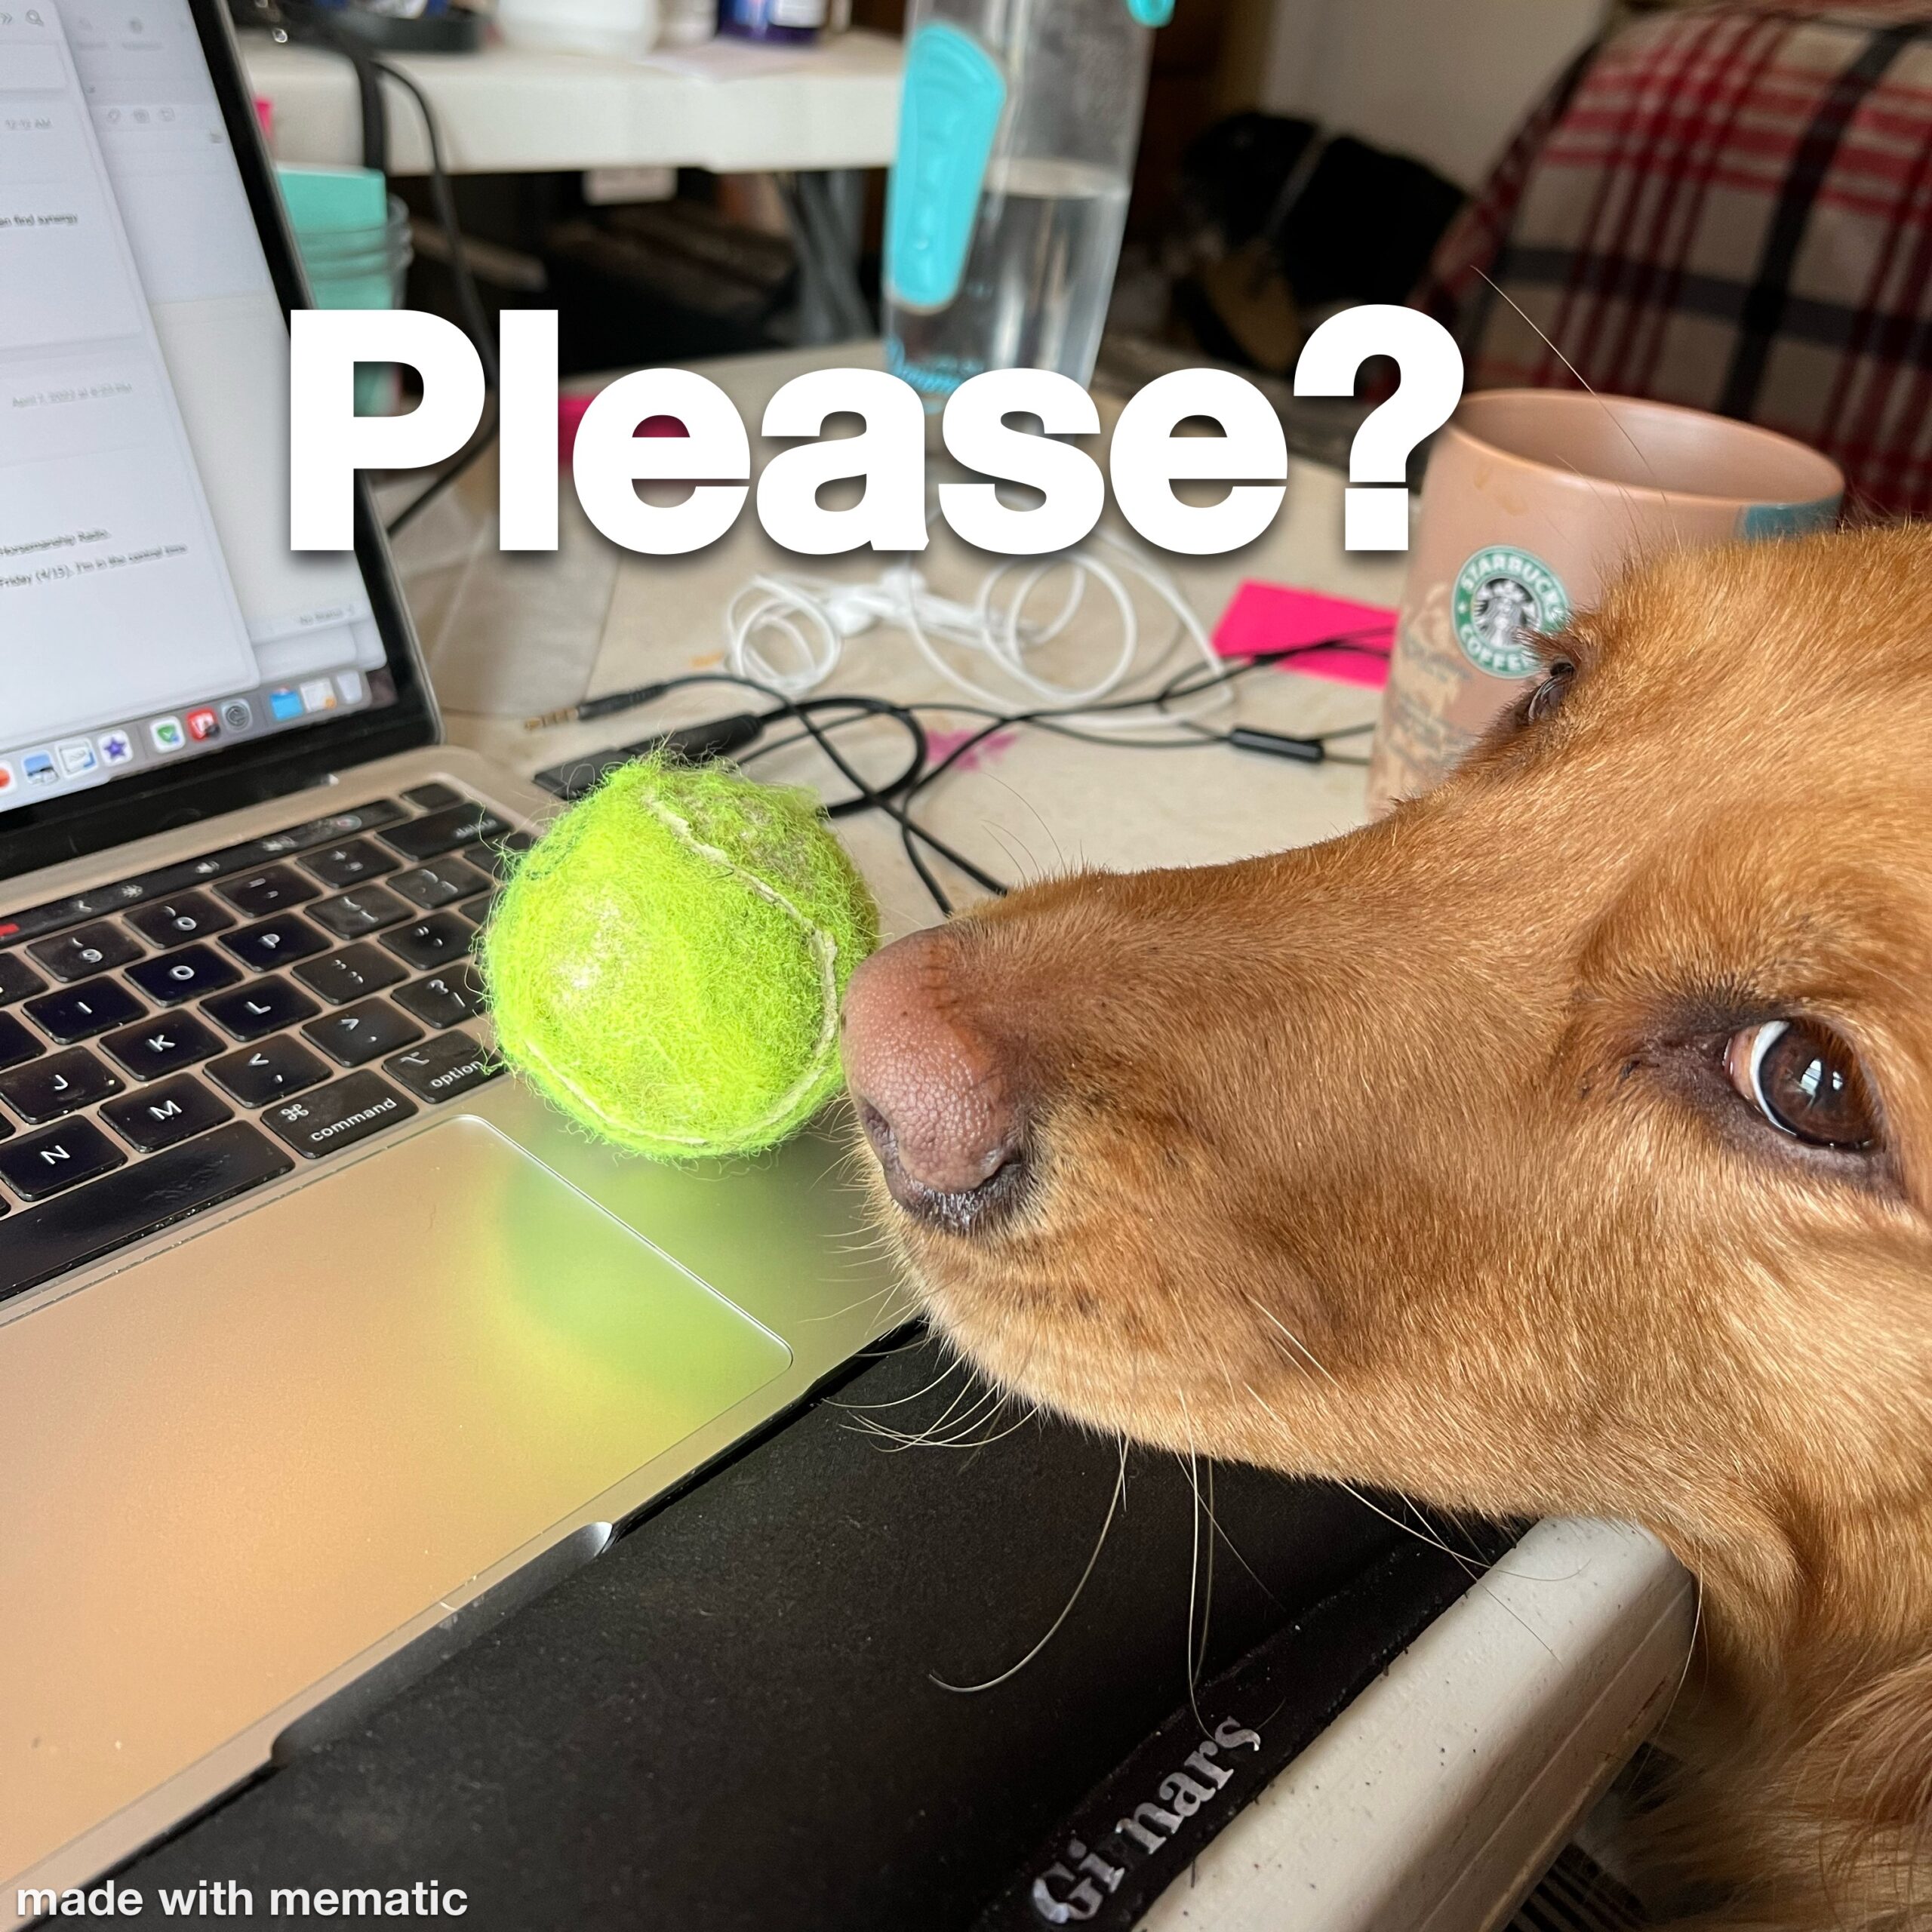 A brown dog has put a tennis ball on a laptop keyboard